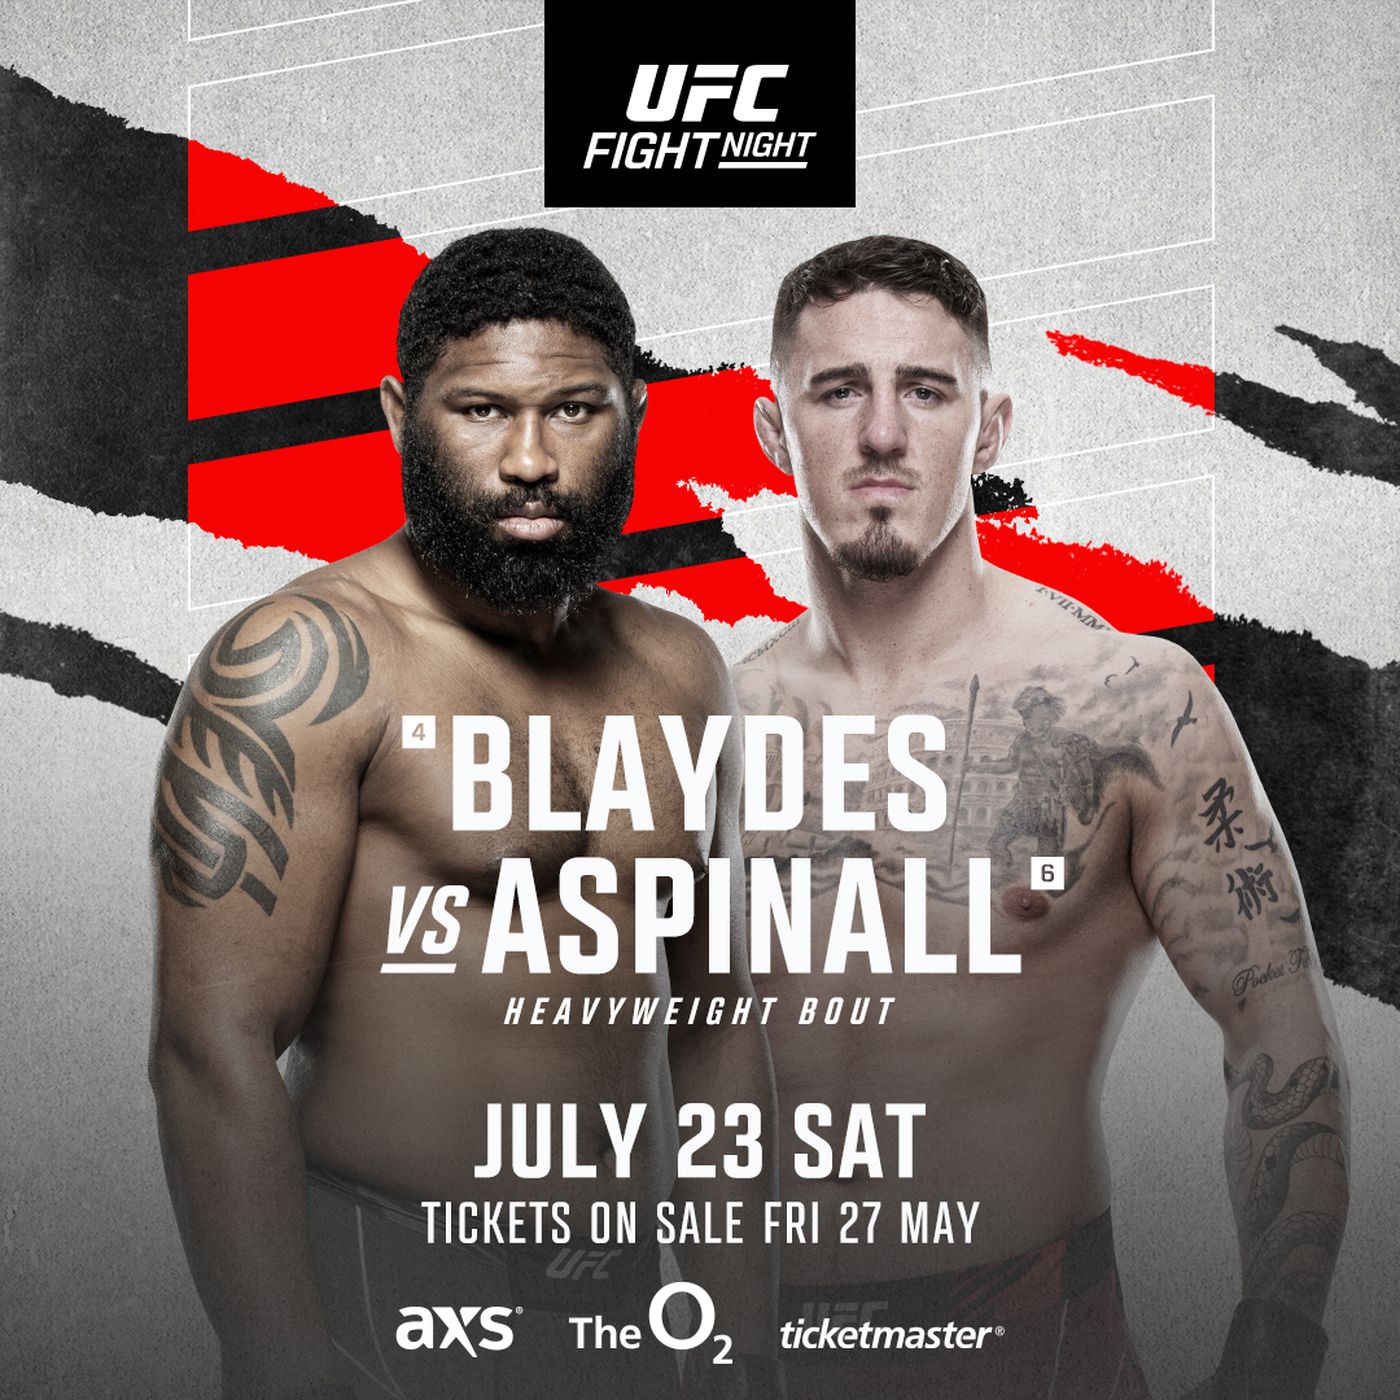 UFC Londra tartıyor: Curtis Blaydes vs Tom Aspinall, The O2 Arena, Londra, Starstruck hesaplaşmasının ortasında ateşe verildi